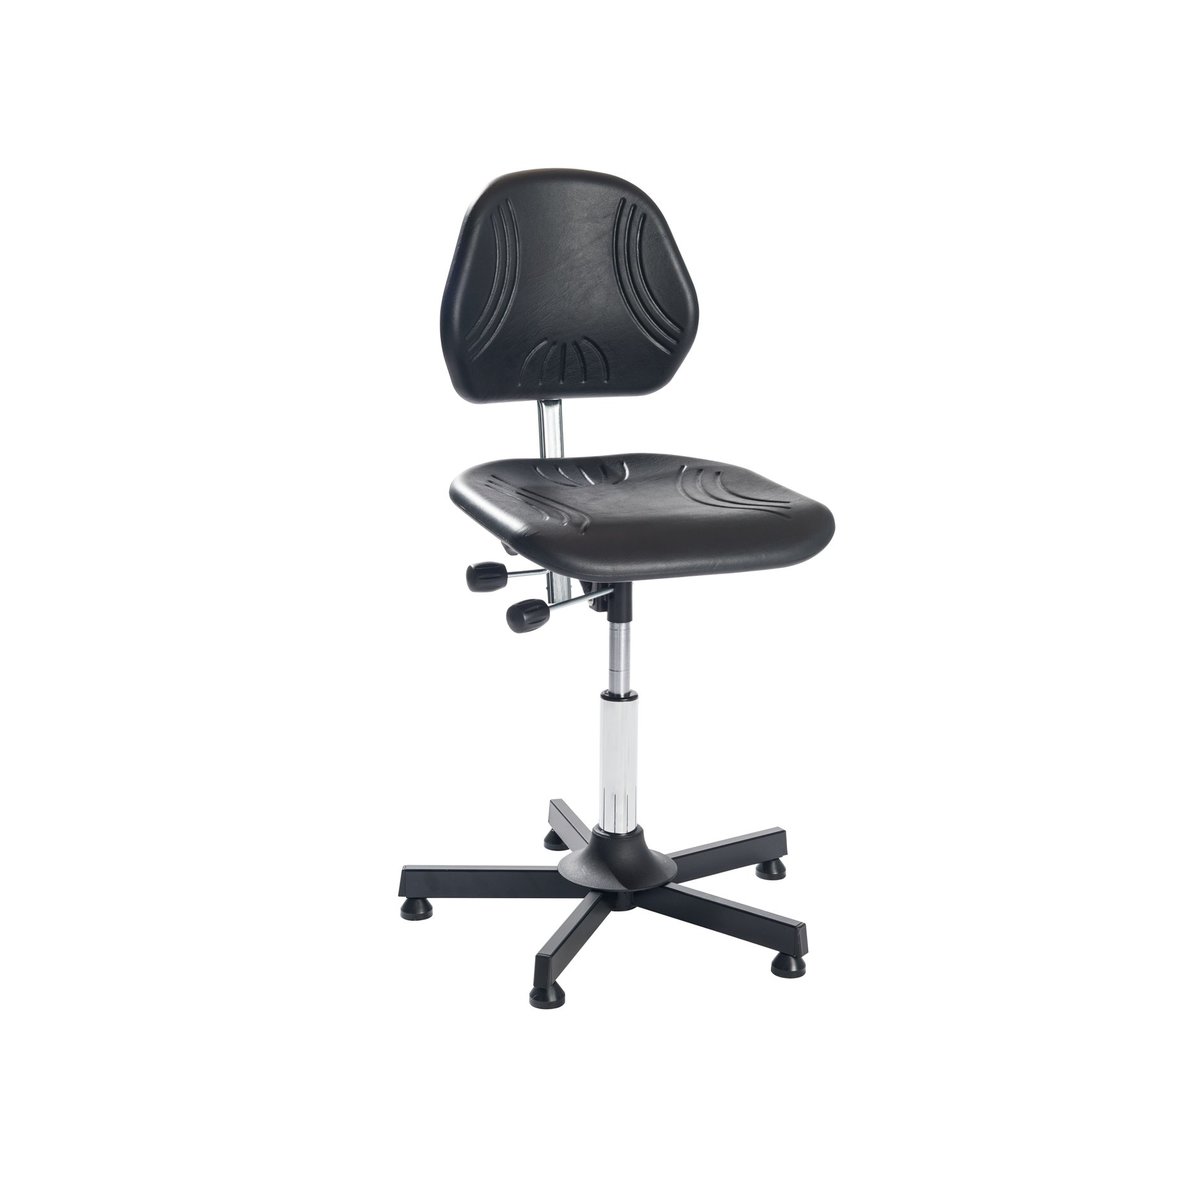 88601010 - Industrial chair